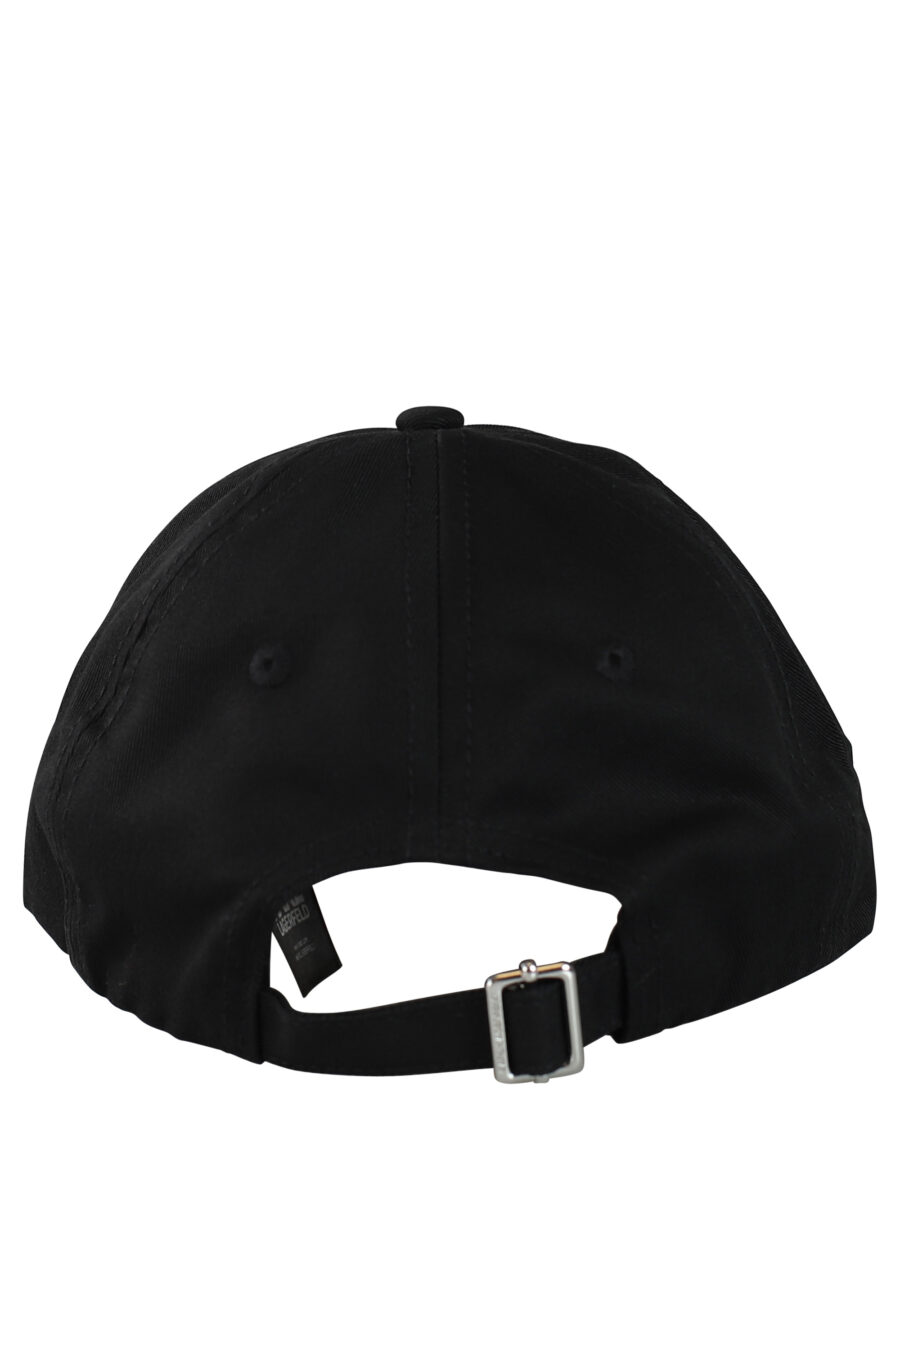 Black cap with logo on visor "essential" - 8720744104872 2